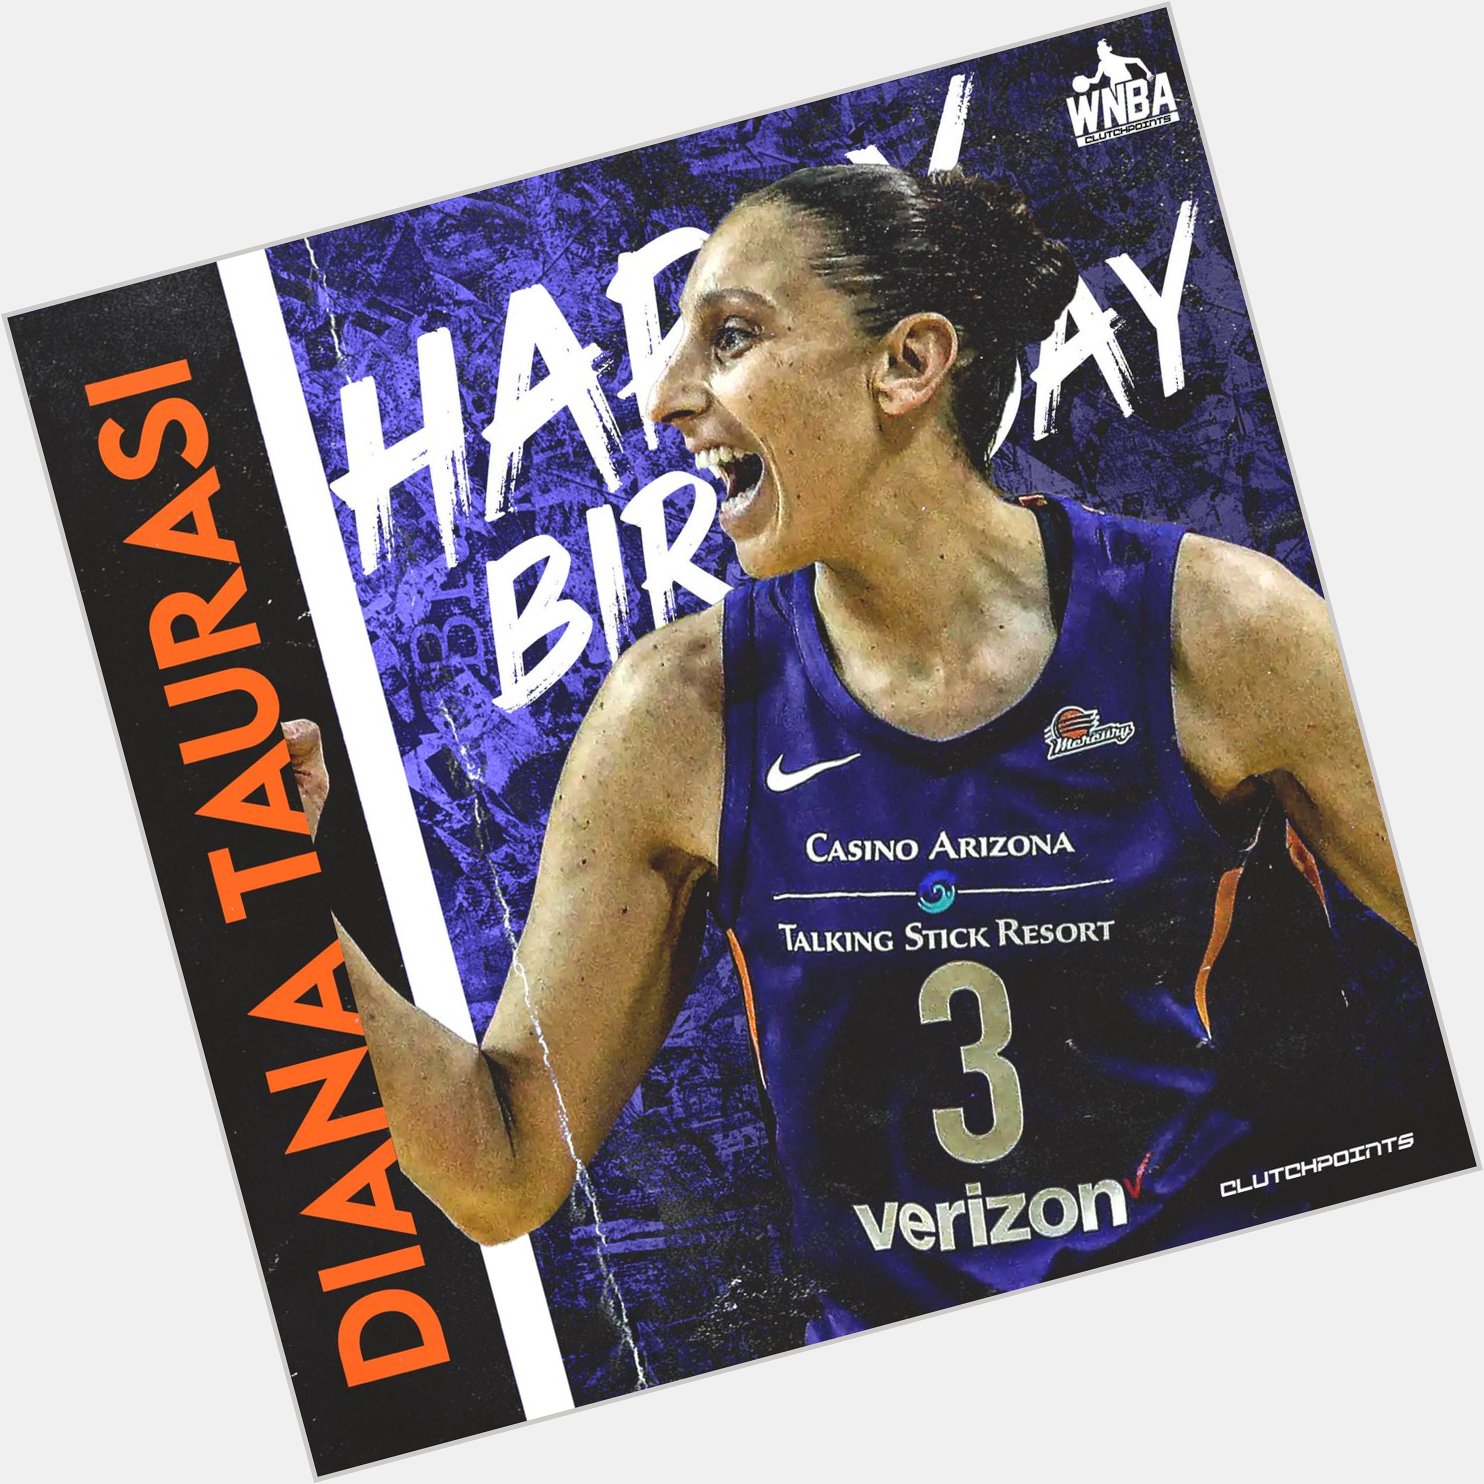 WNBA fans, let us all greet Diana Taurasi a happy 39th birthday!  